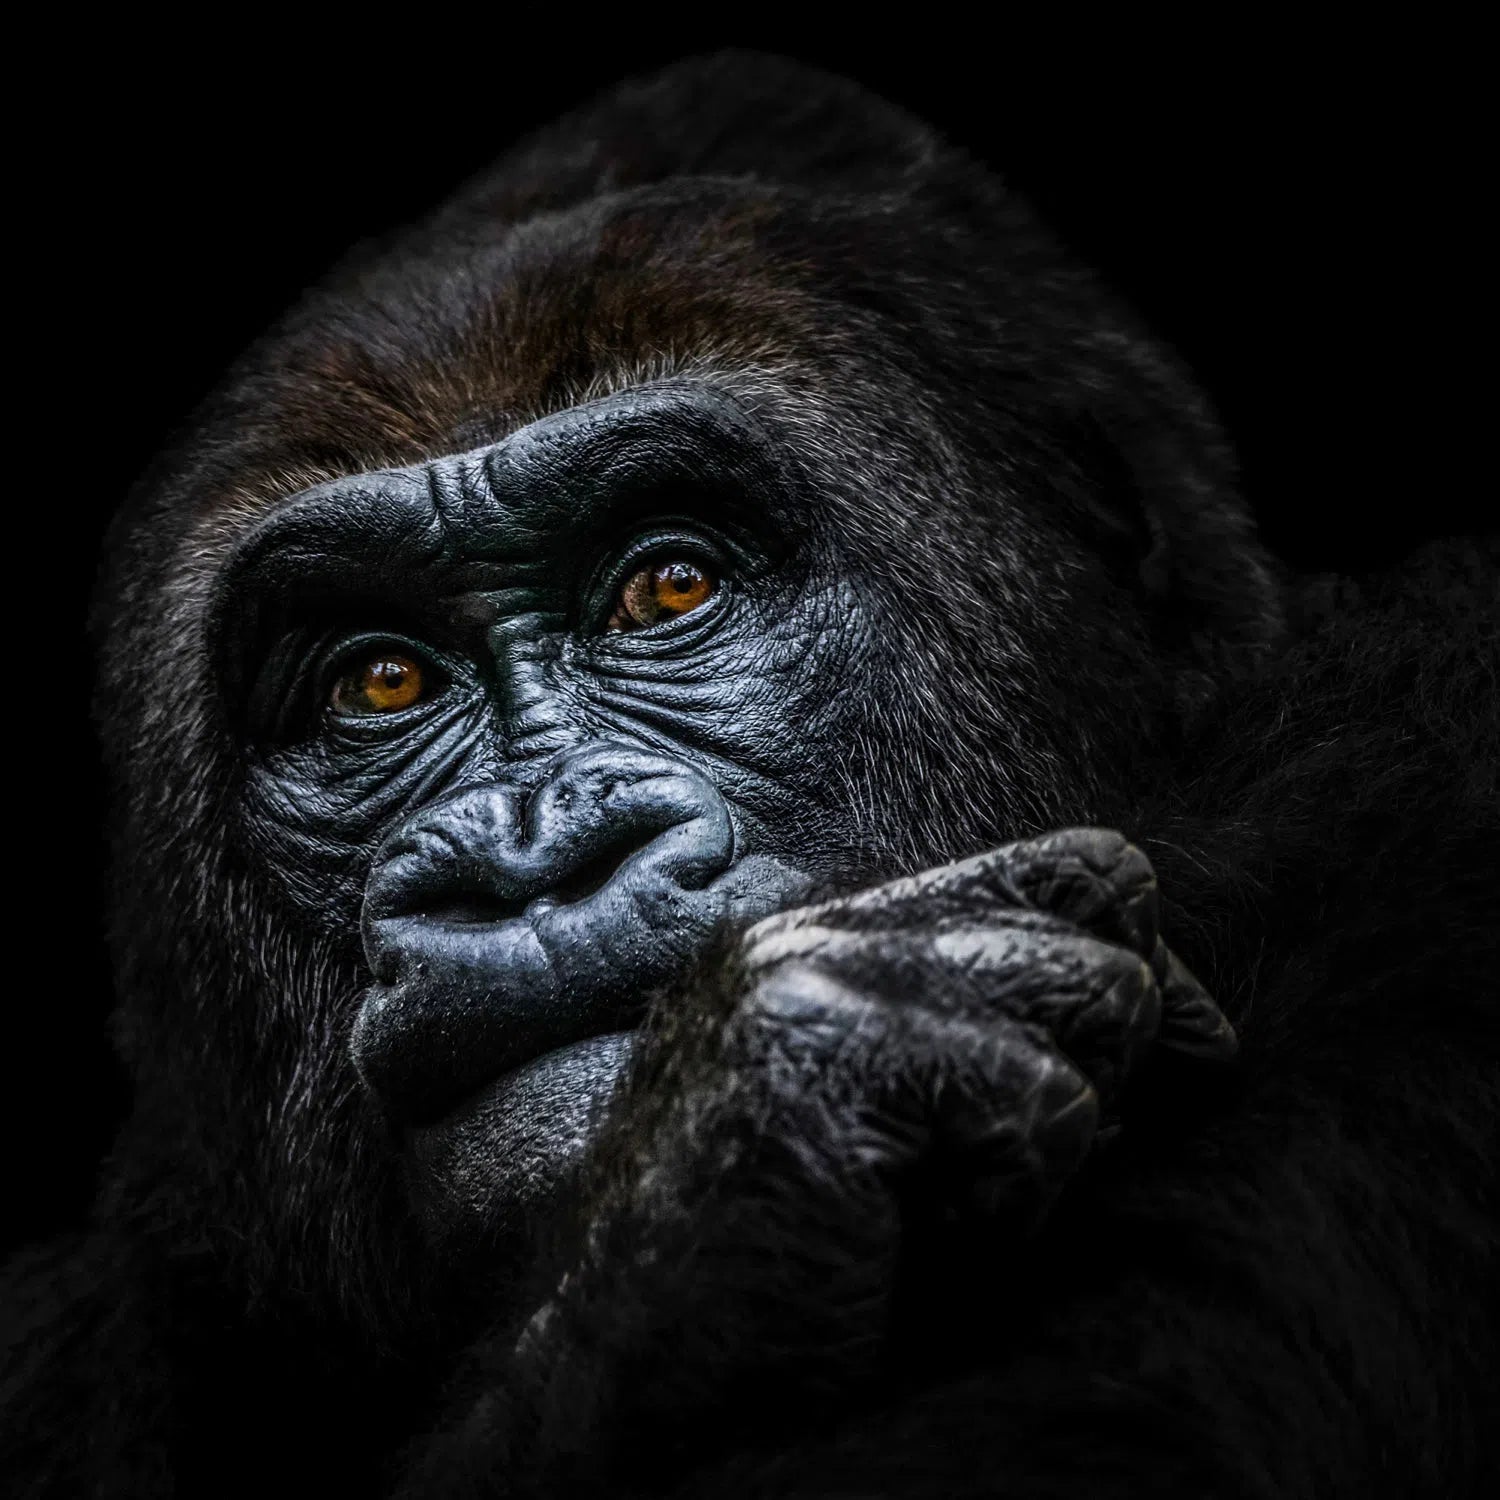 Le gorille pensif-Imagesdartistes